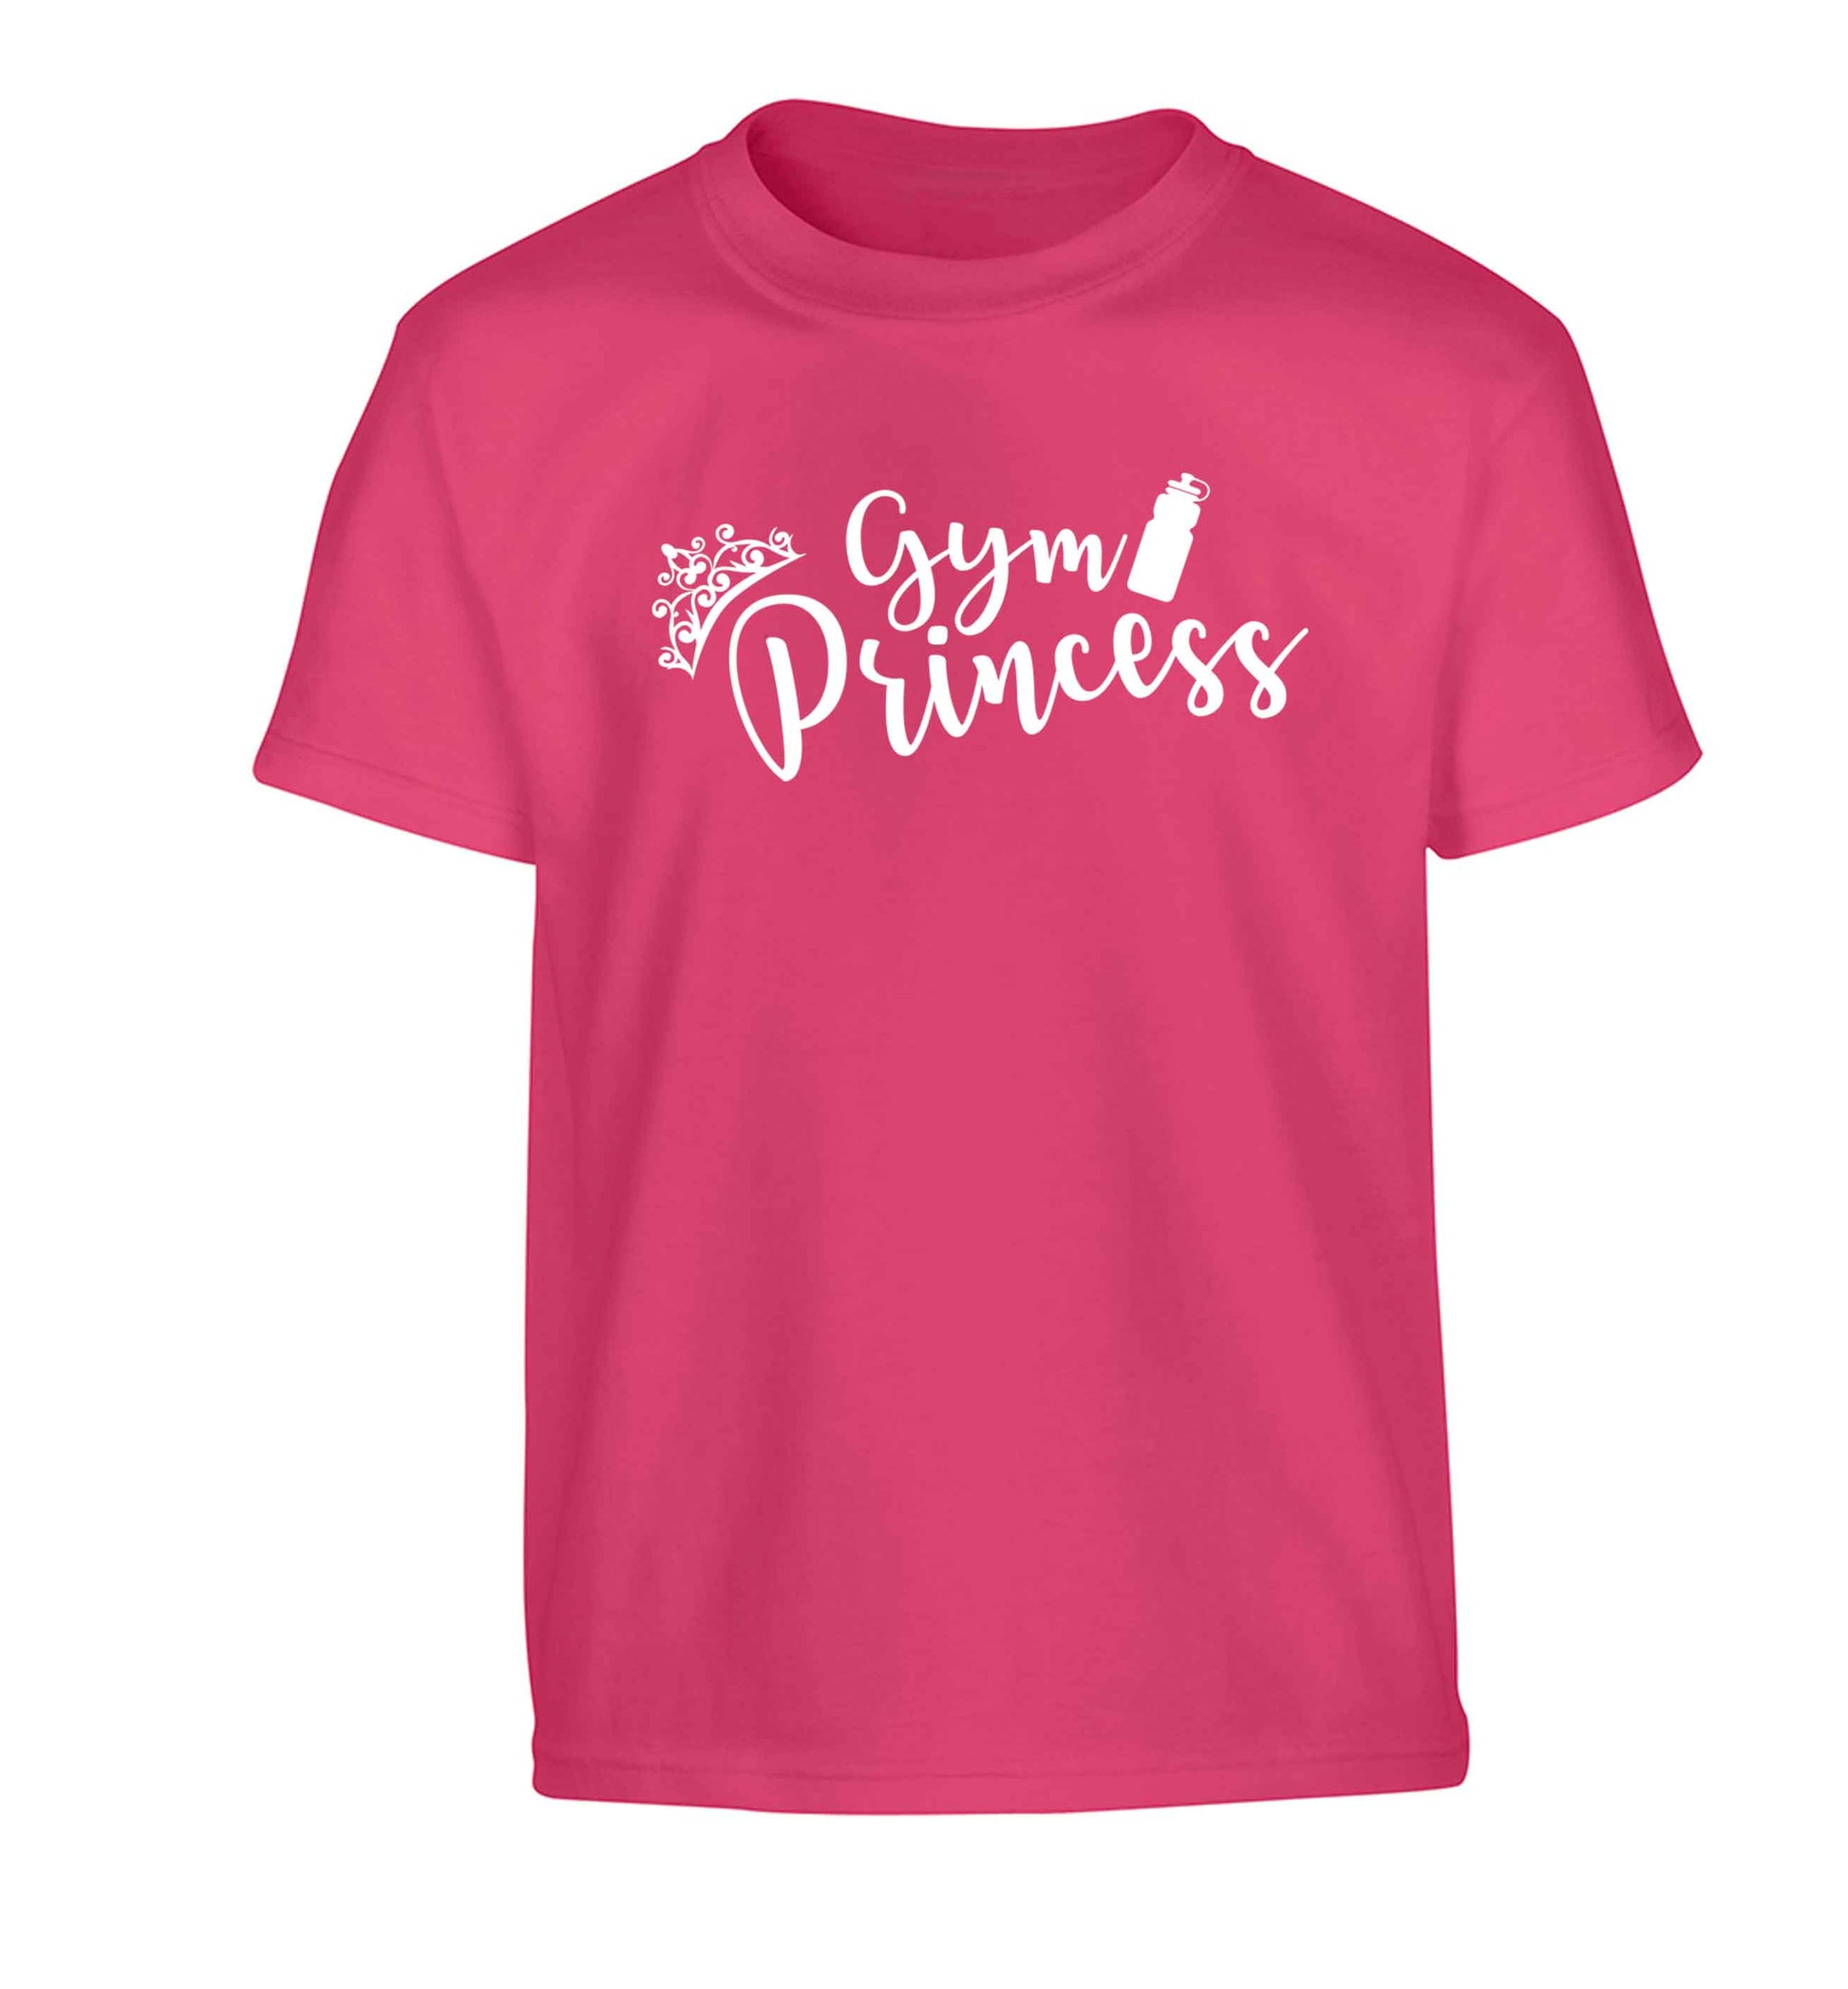 Gym princess Children's pink Tshirt 12-13 Years